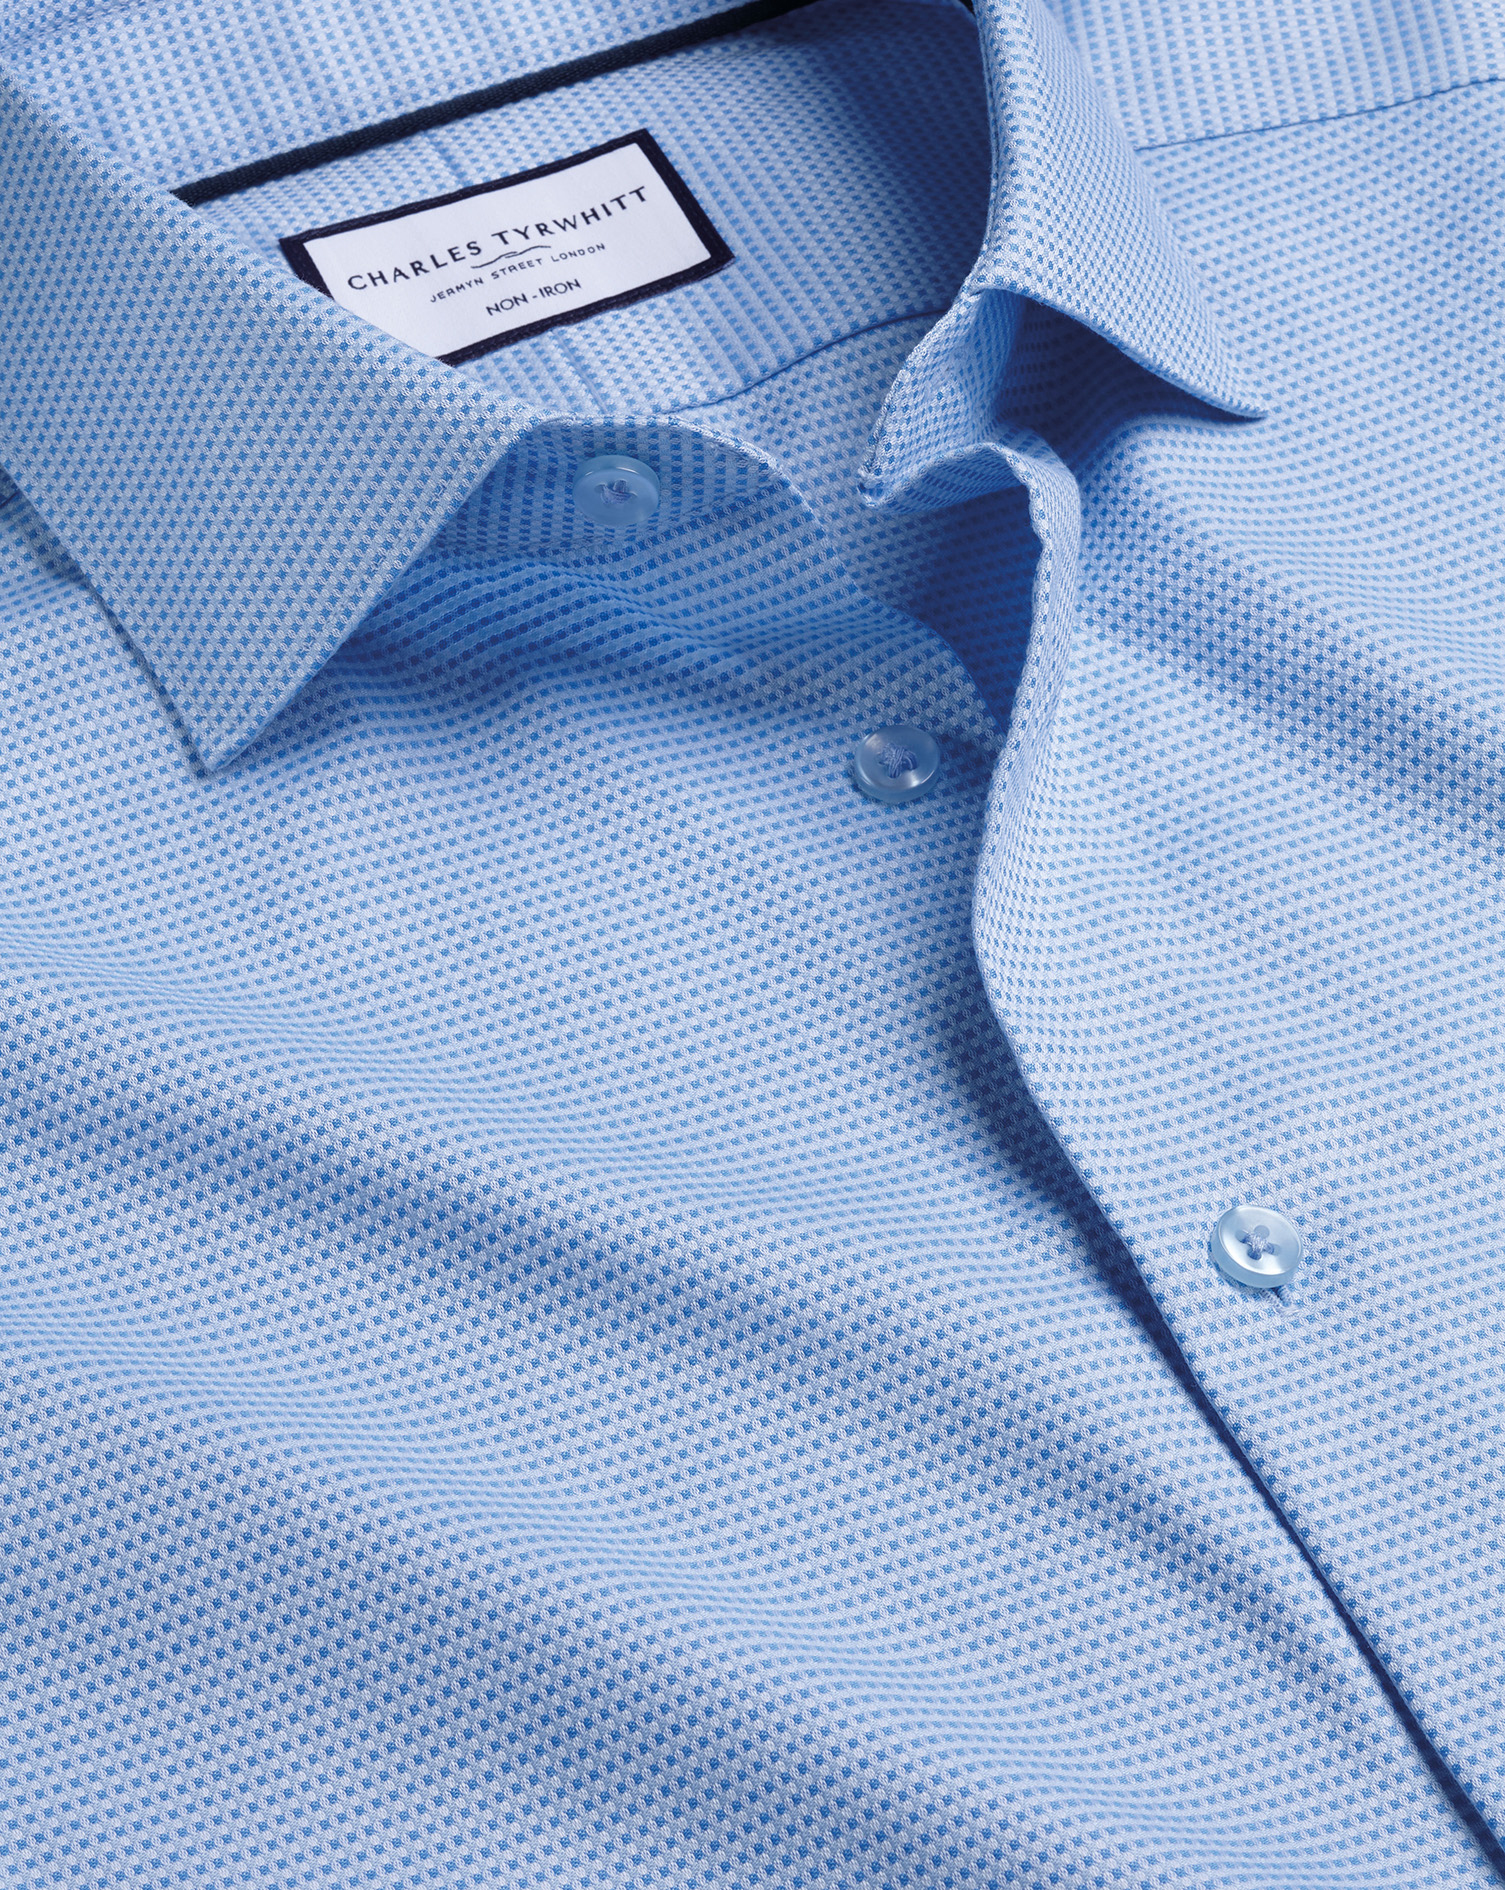 Men's Charles Tyrwhitt Non-Iron Stretch Texture Square Dress Shirt - Sky Blue Single Cuff Size XXL C